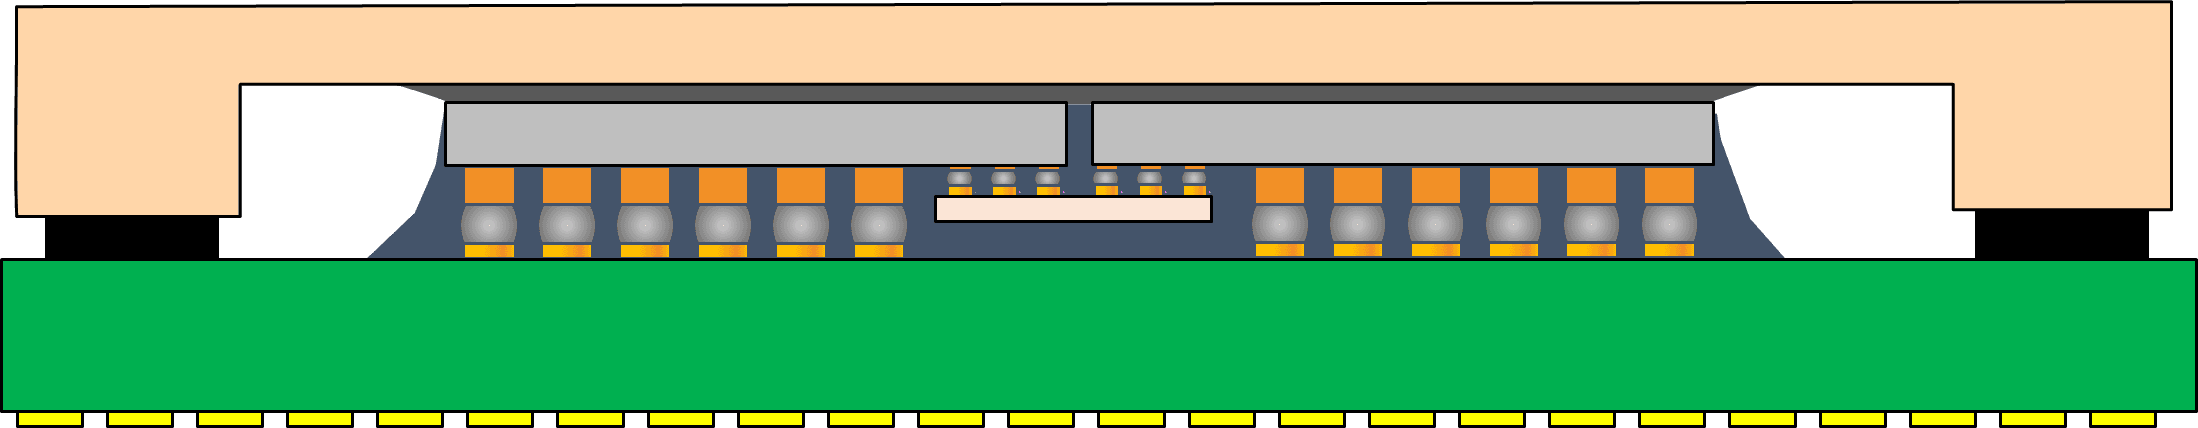 Illustration of a direct-bonded heterogeneous integration (DBHi) silicon bridge package.